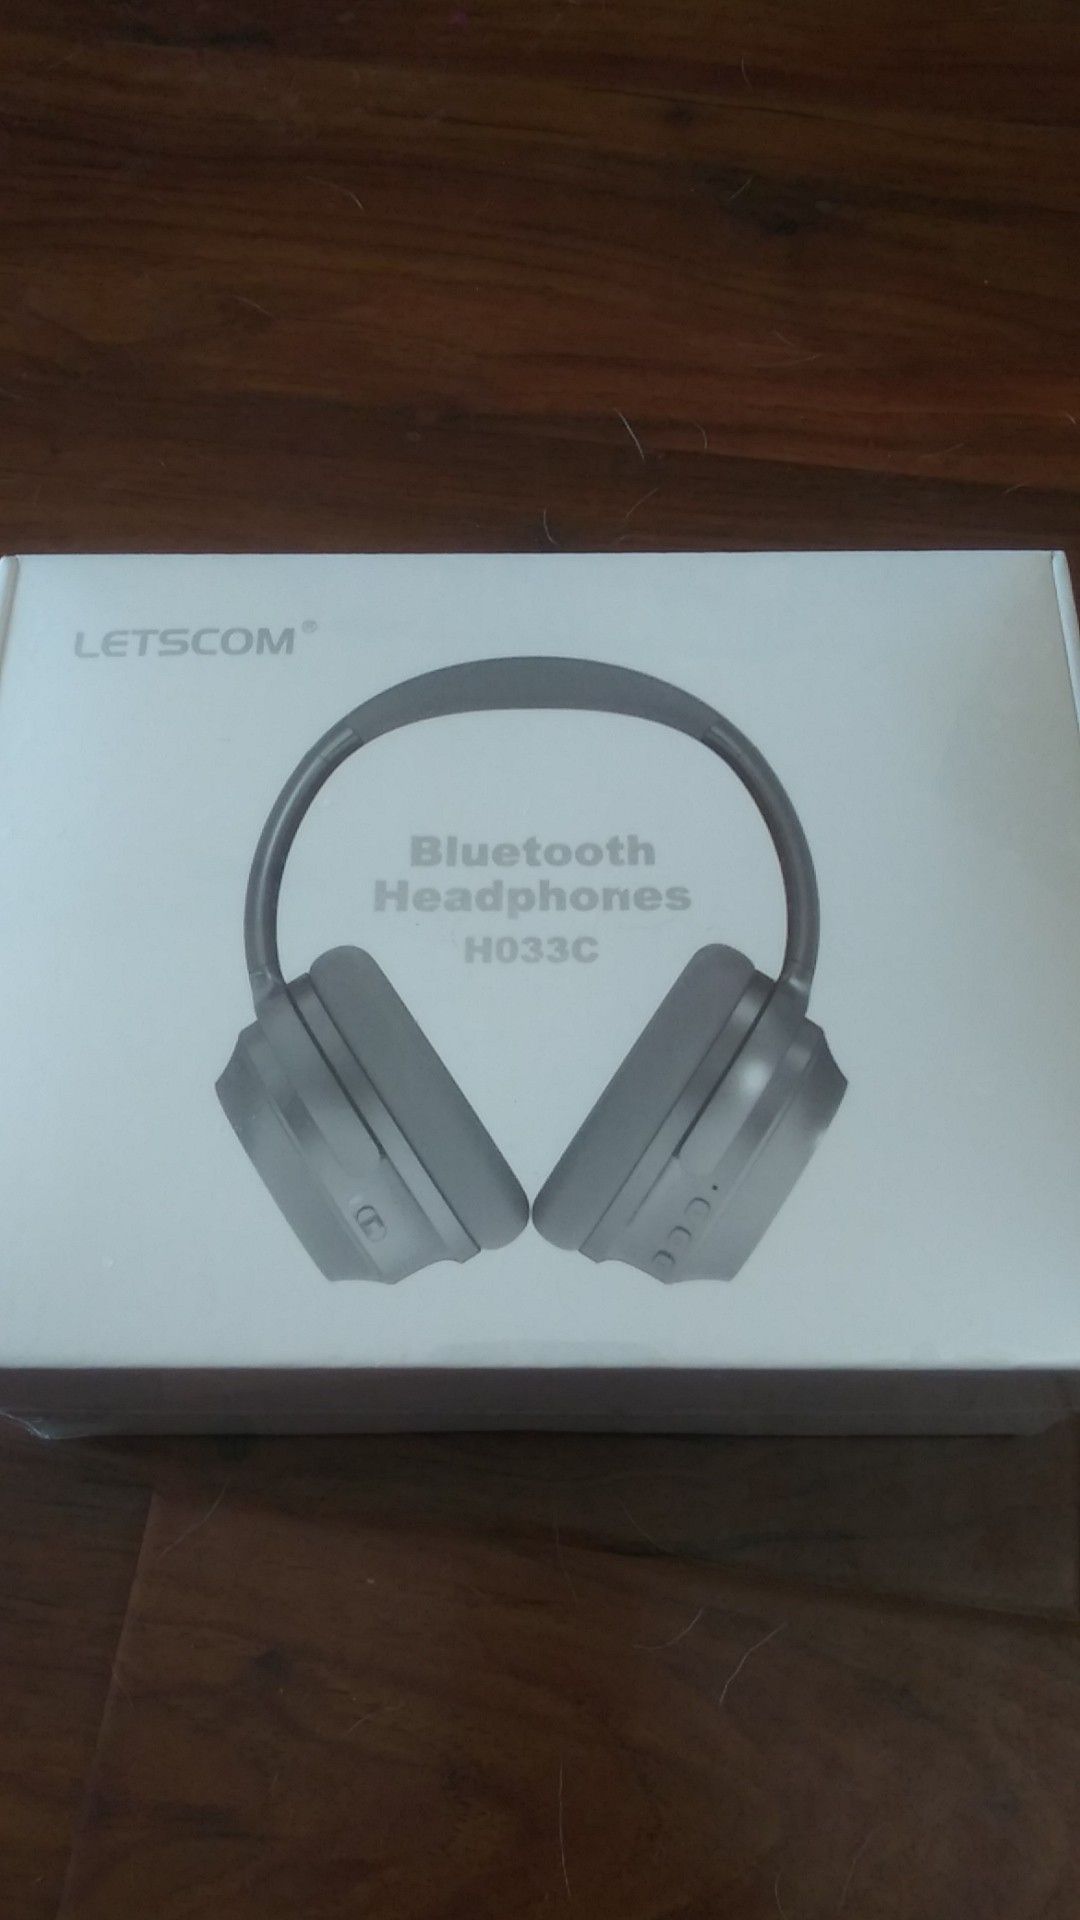 Letscom Bluetooth headphones